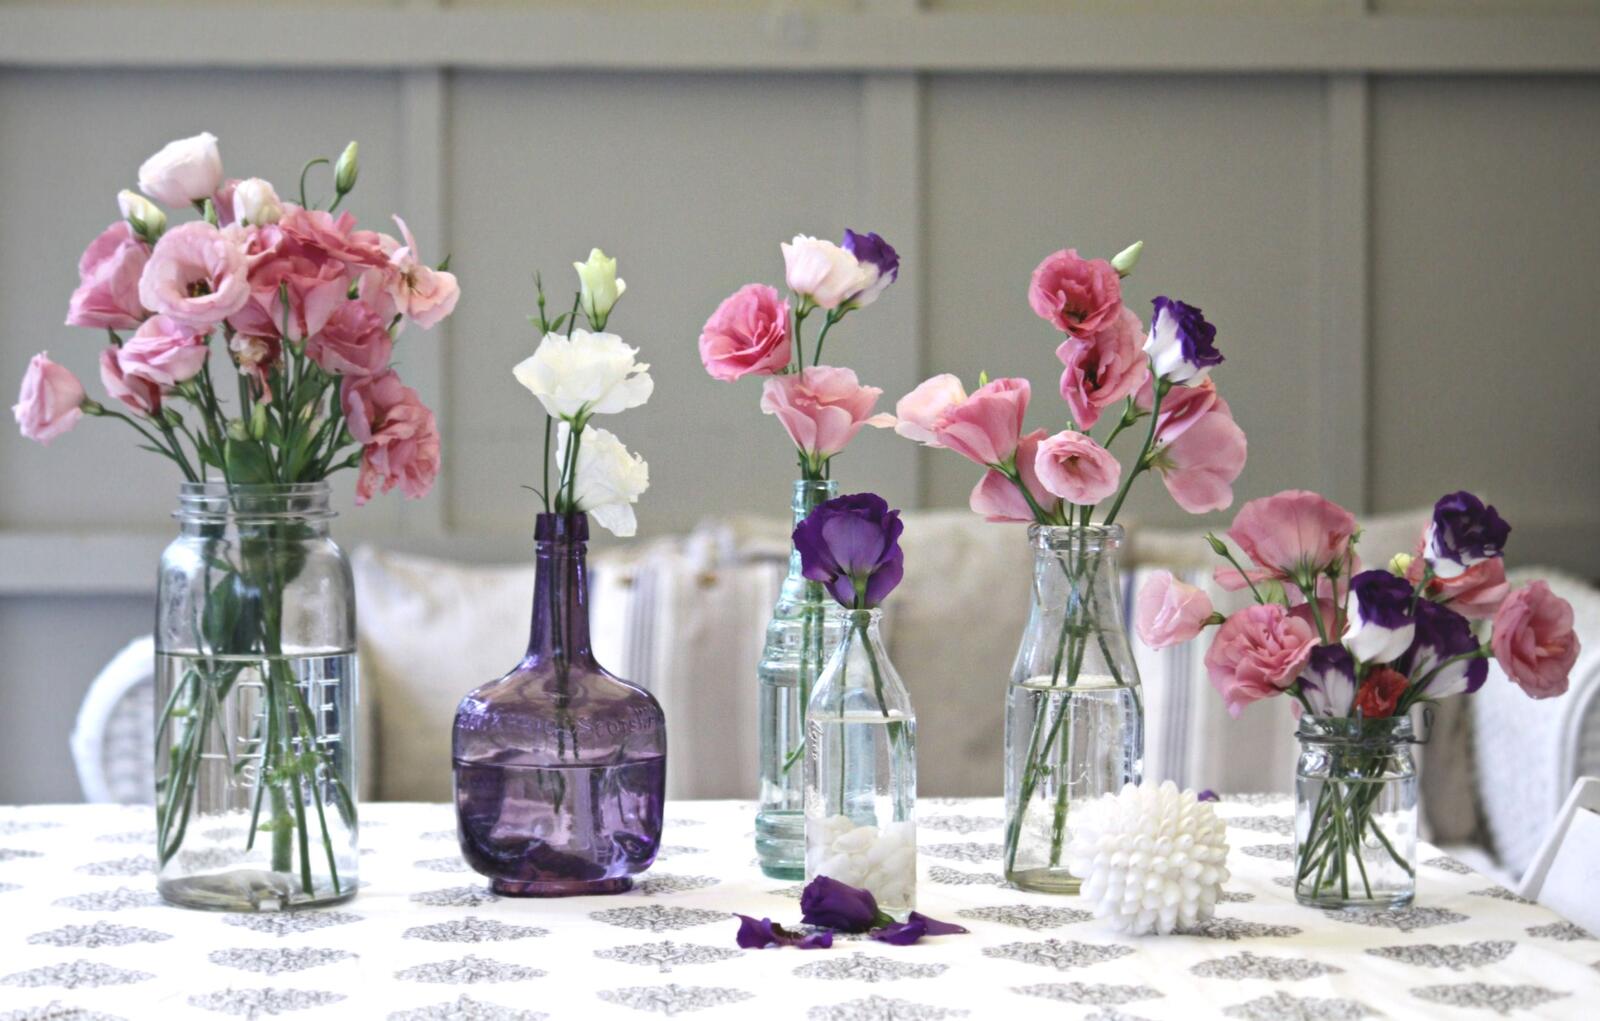 Wallpapers bottles vases bouquets on the desktop